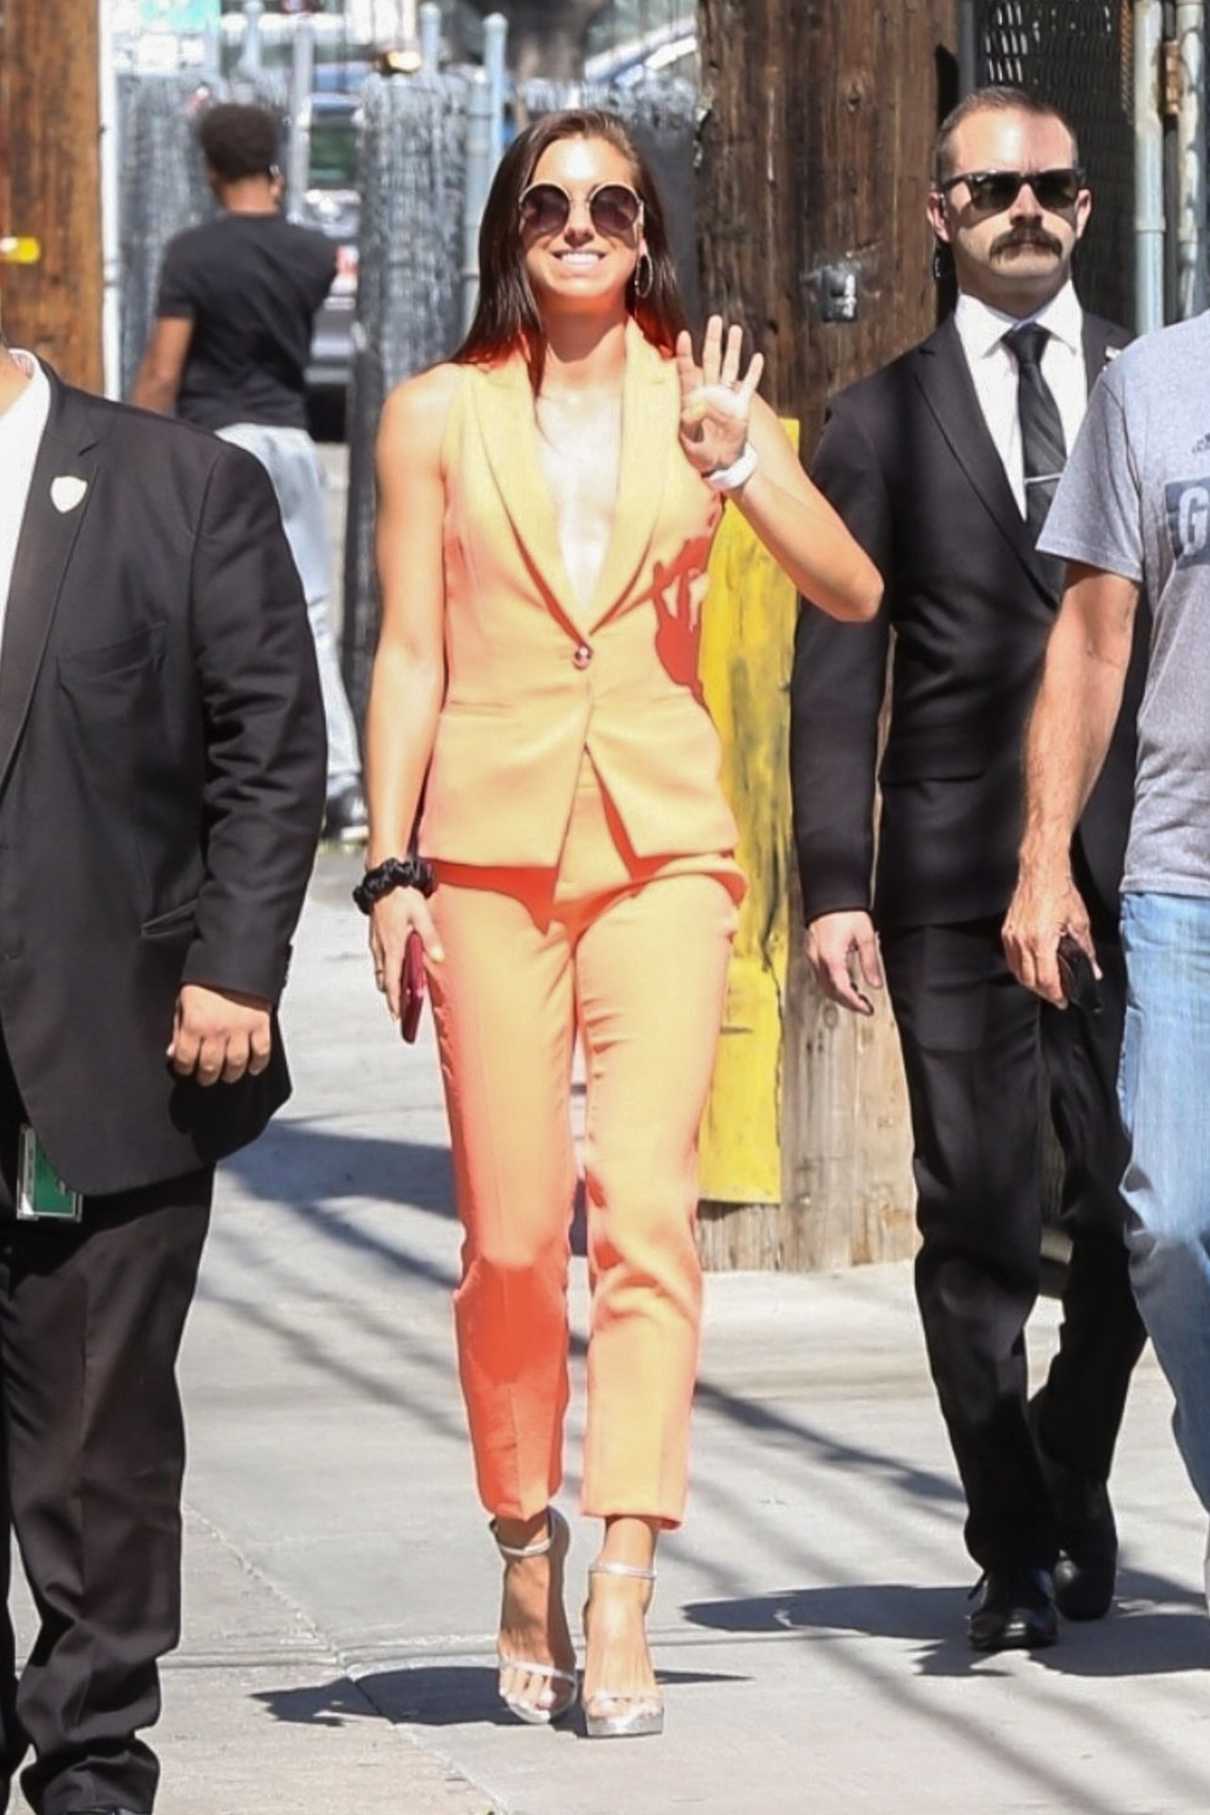 Alex Morgan in an Orange Suit